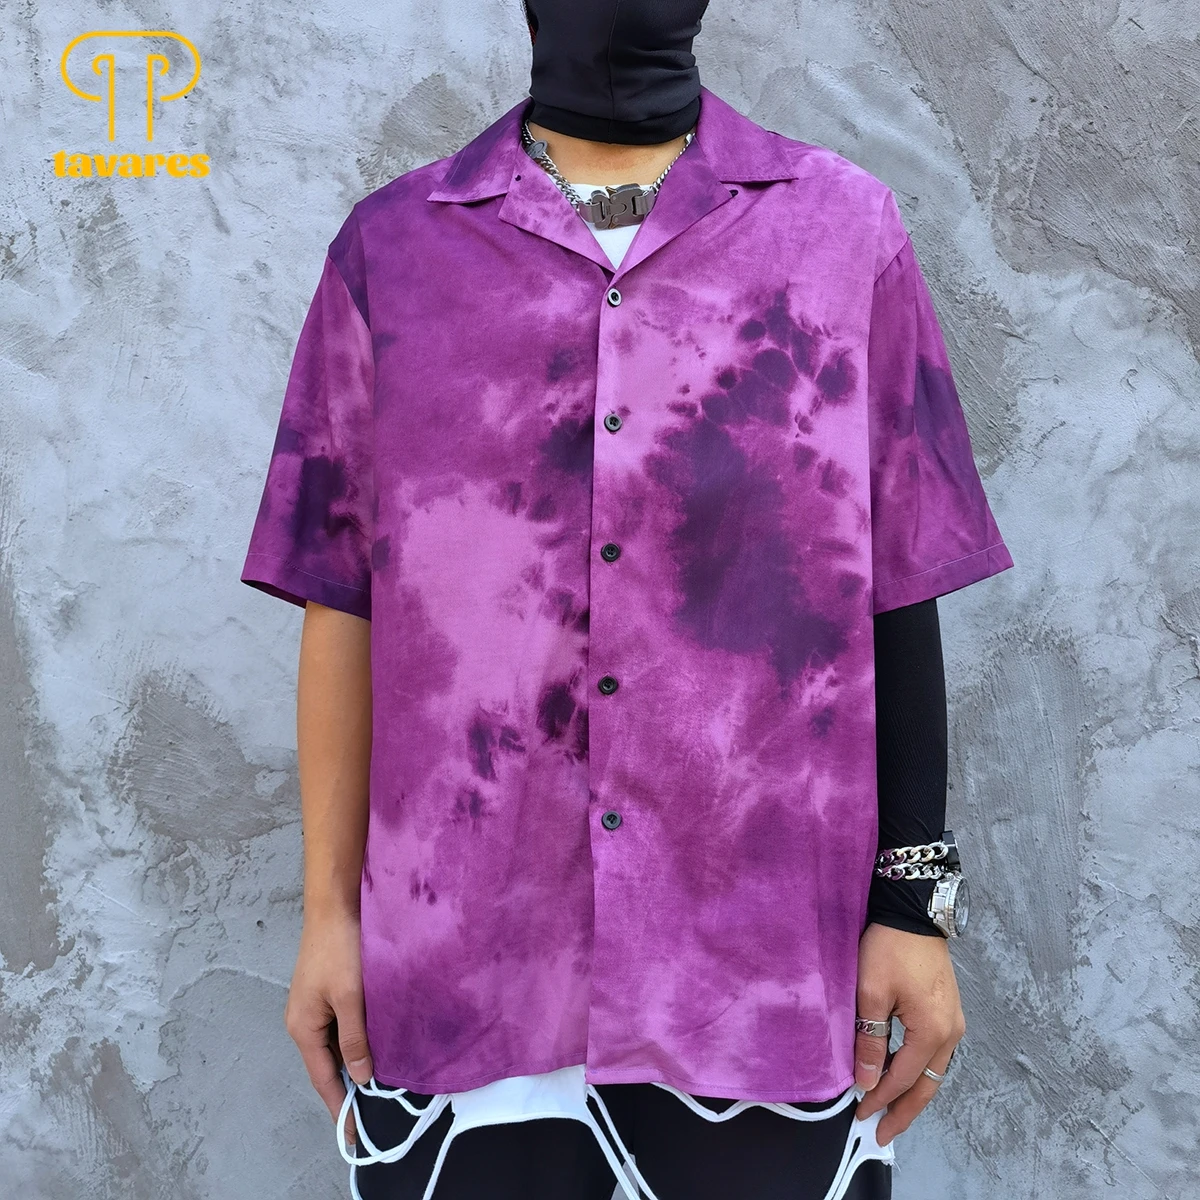 

TAVARES Casual Shirts Men Summer Short Sleeve Shirt Purple Tie Dye Gradient Women Hawaii Beach Blouses Harajuku Gothic Cardigan